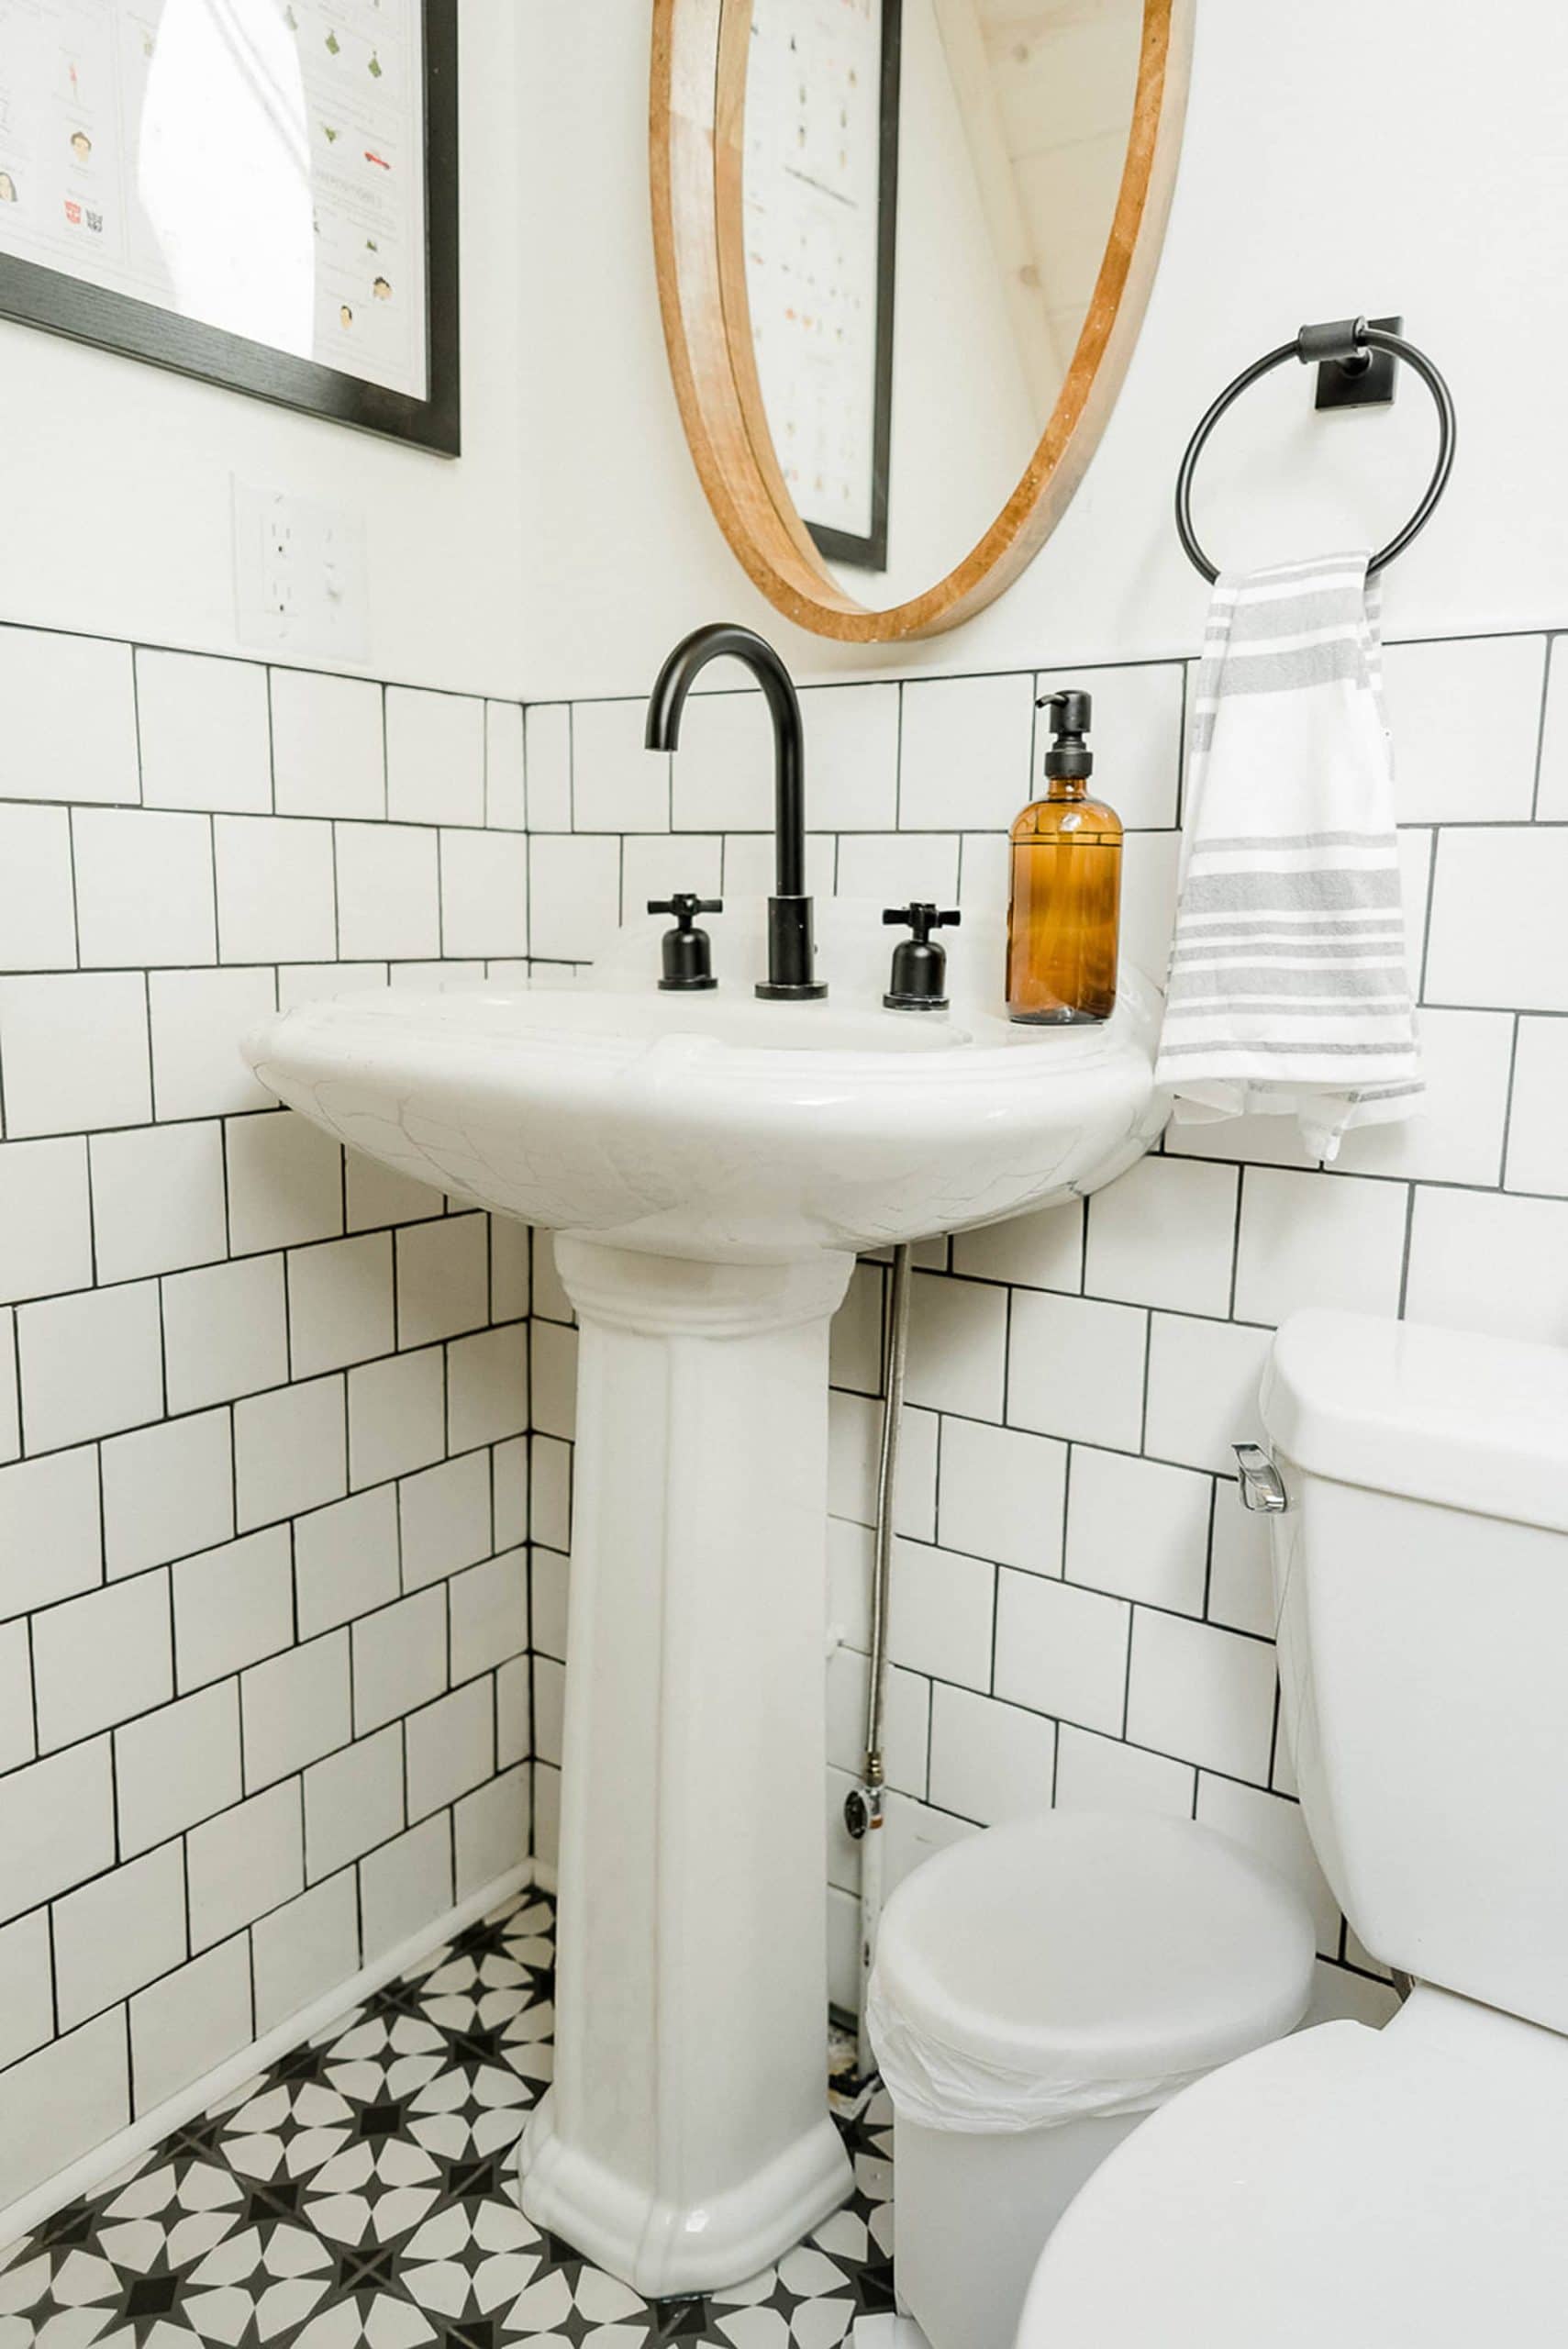 Pedestal sink in a bathroom